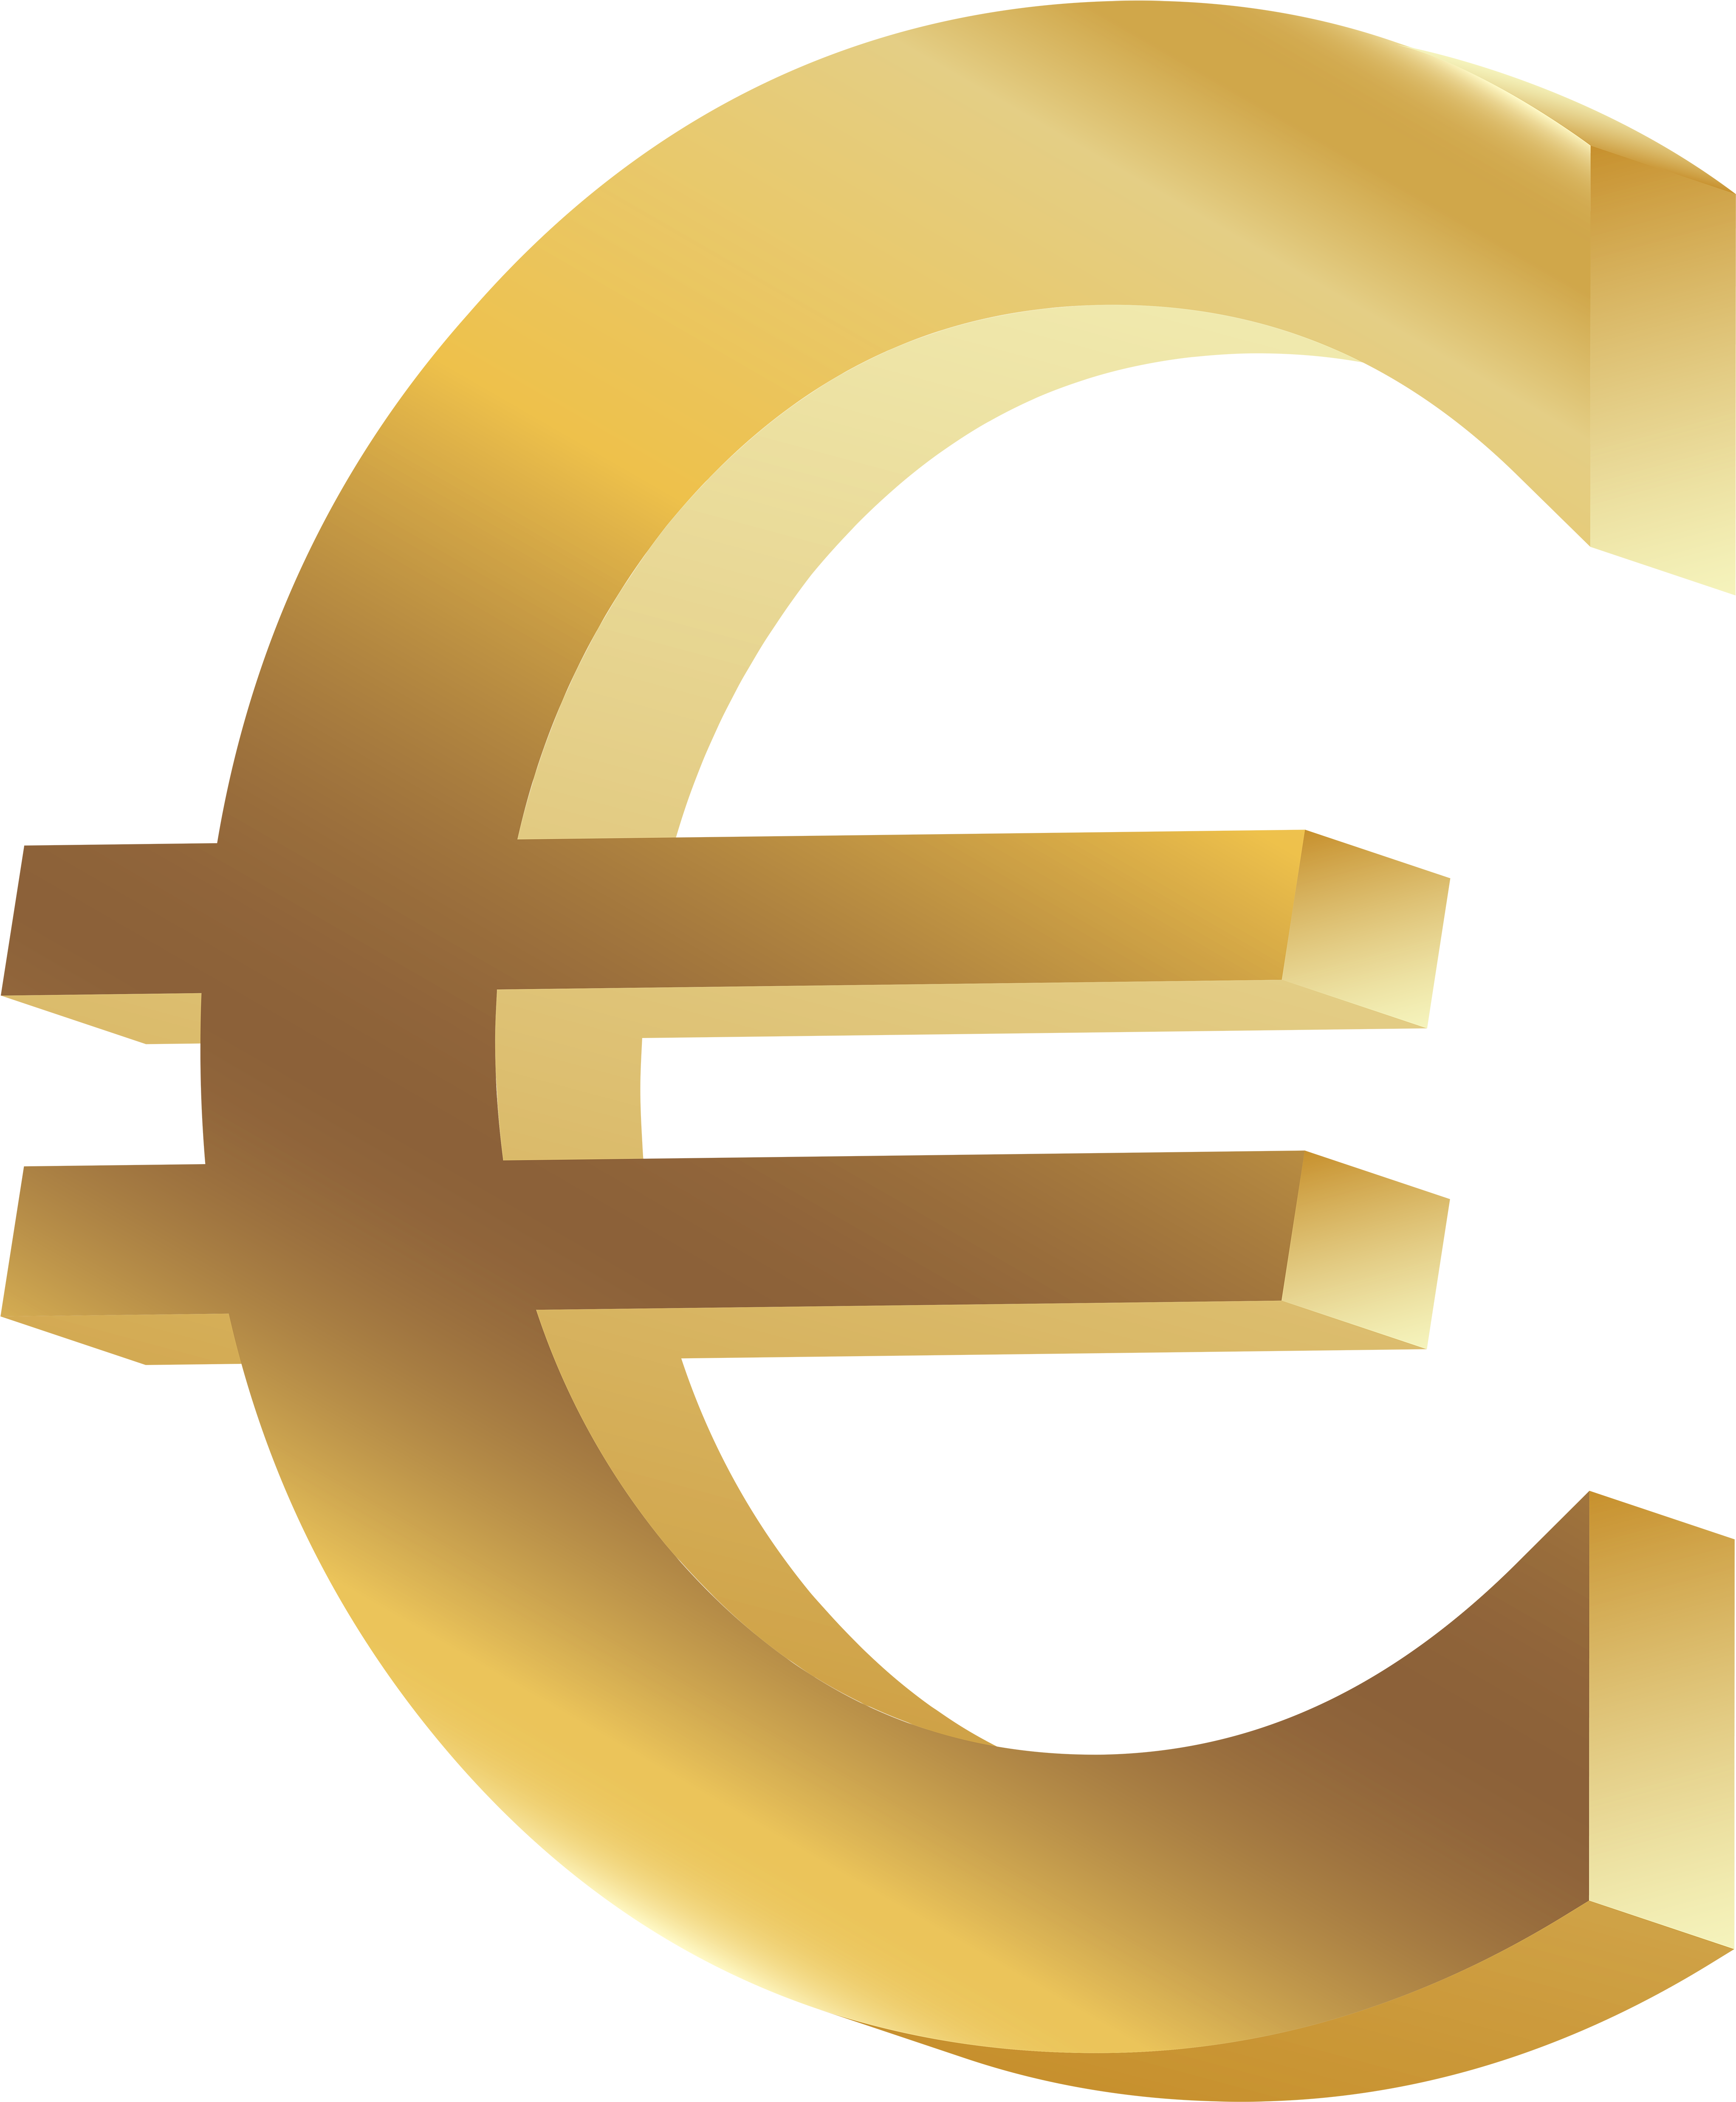 Euro currency. Знак евро. Евро логотип. Символ евро. Евро значок валюты.